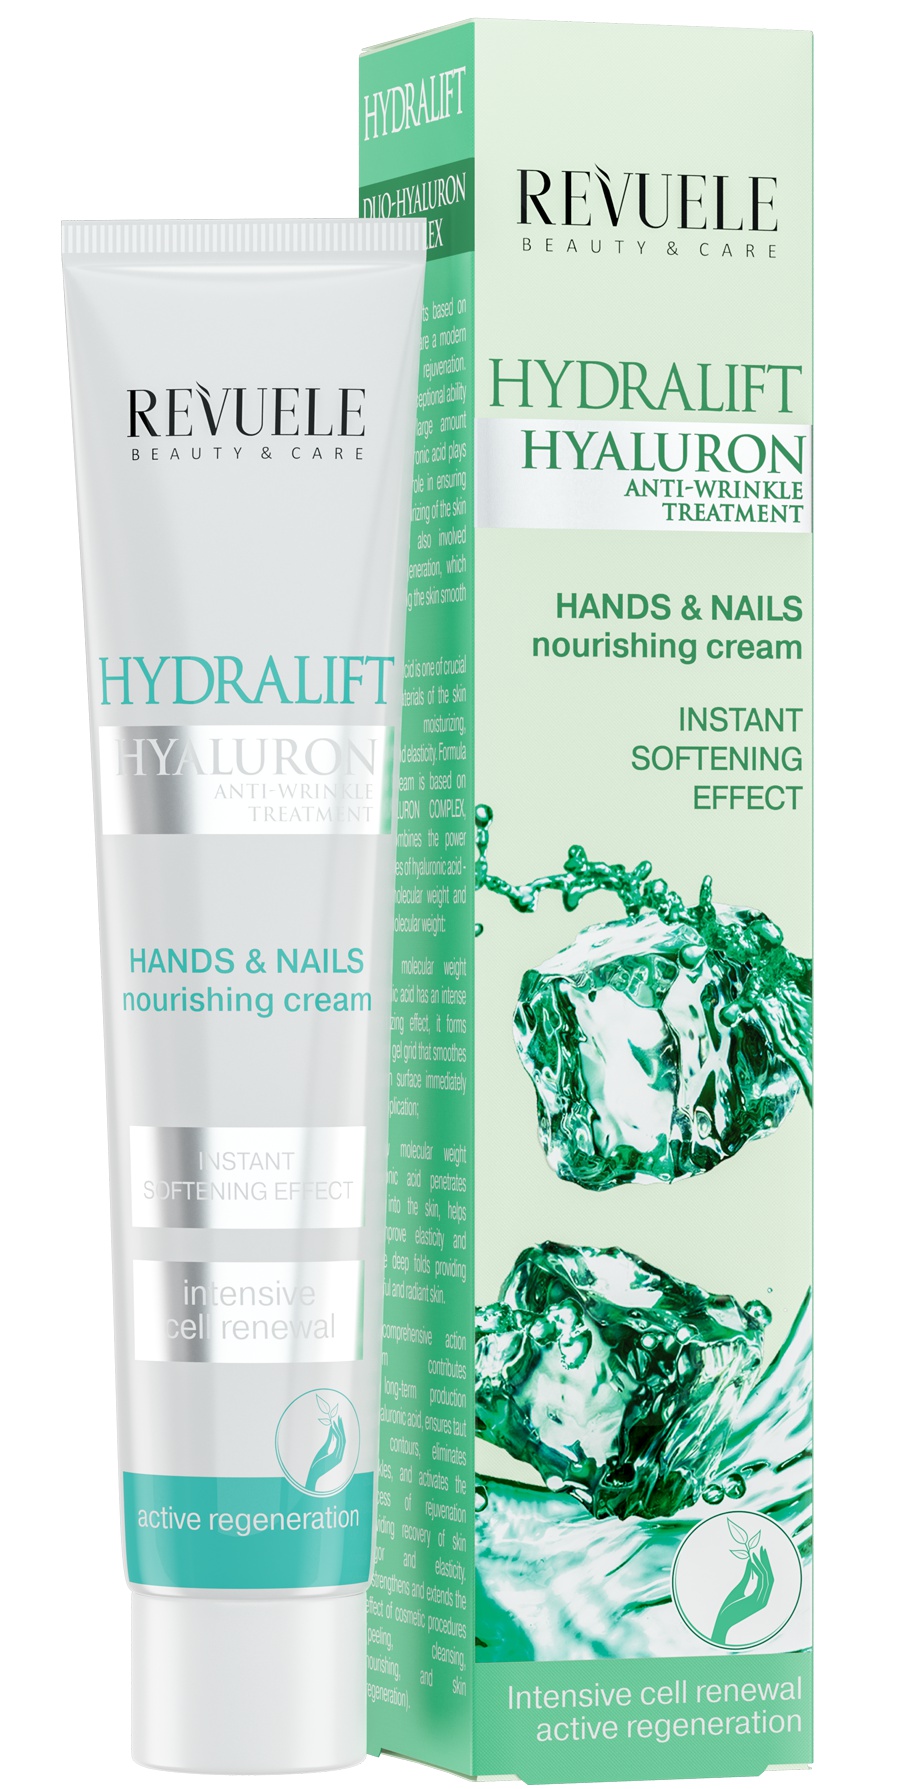 Revuele Hydralift Hyaluron Hands & Nails Nourishing Cream